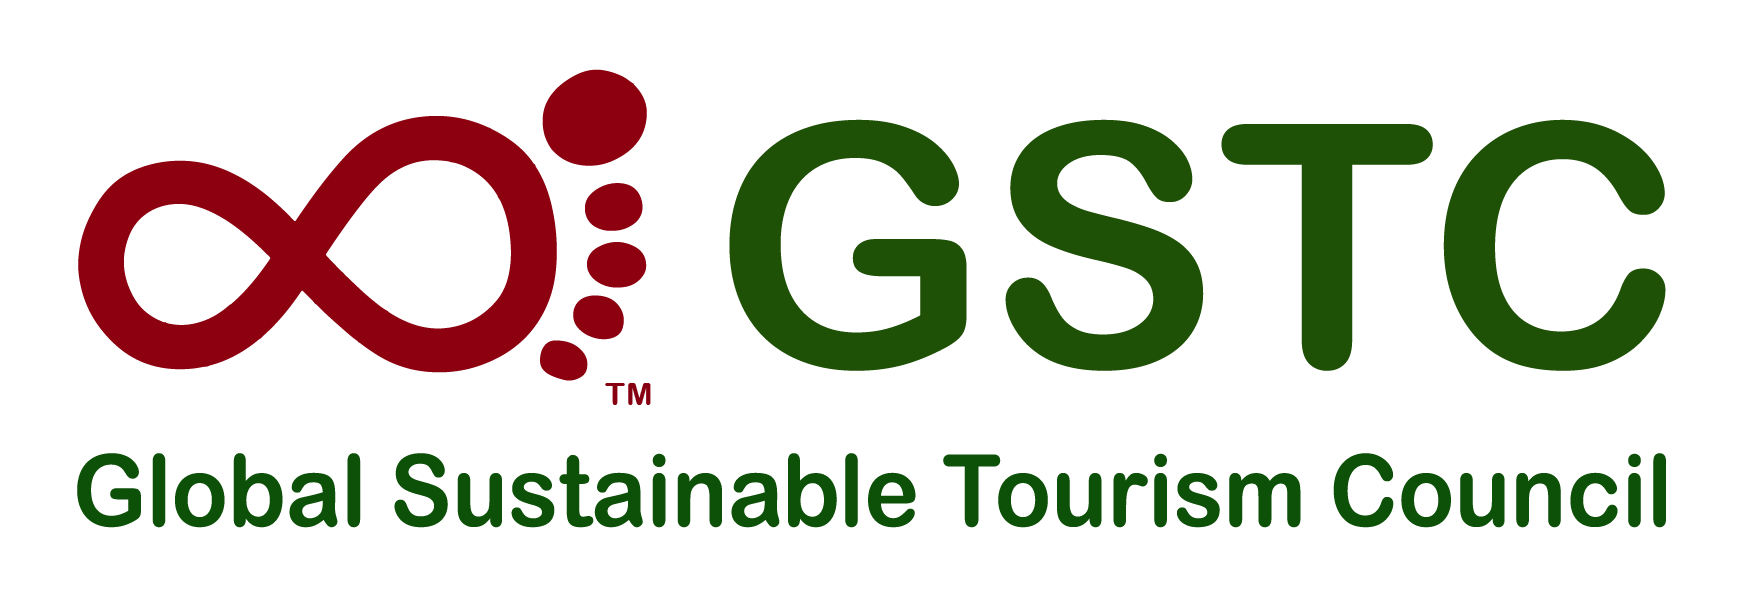 GSTC logo